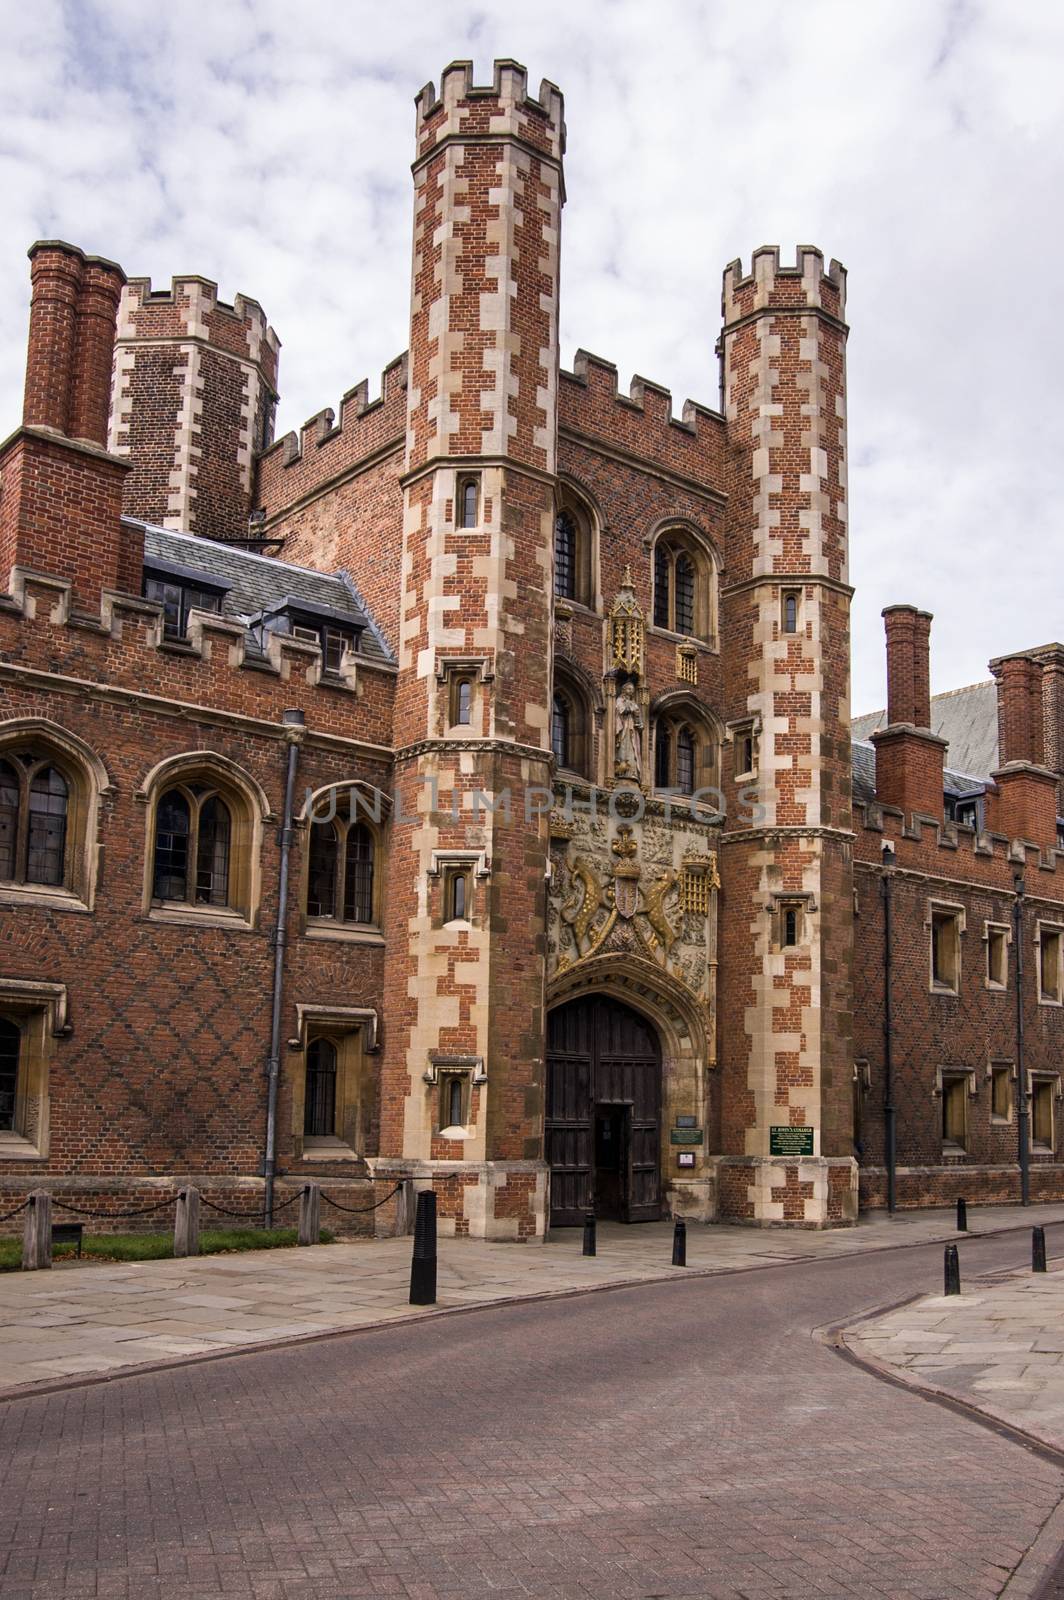  St John's College,Cambridge University by BasPhoto